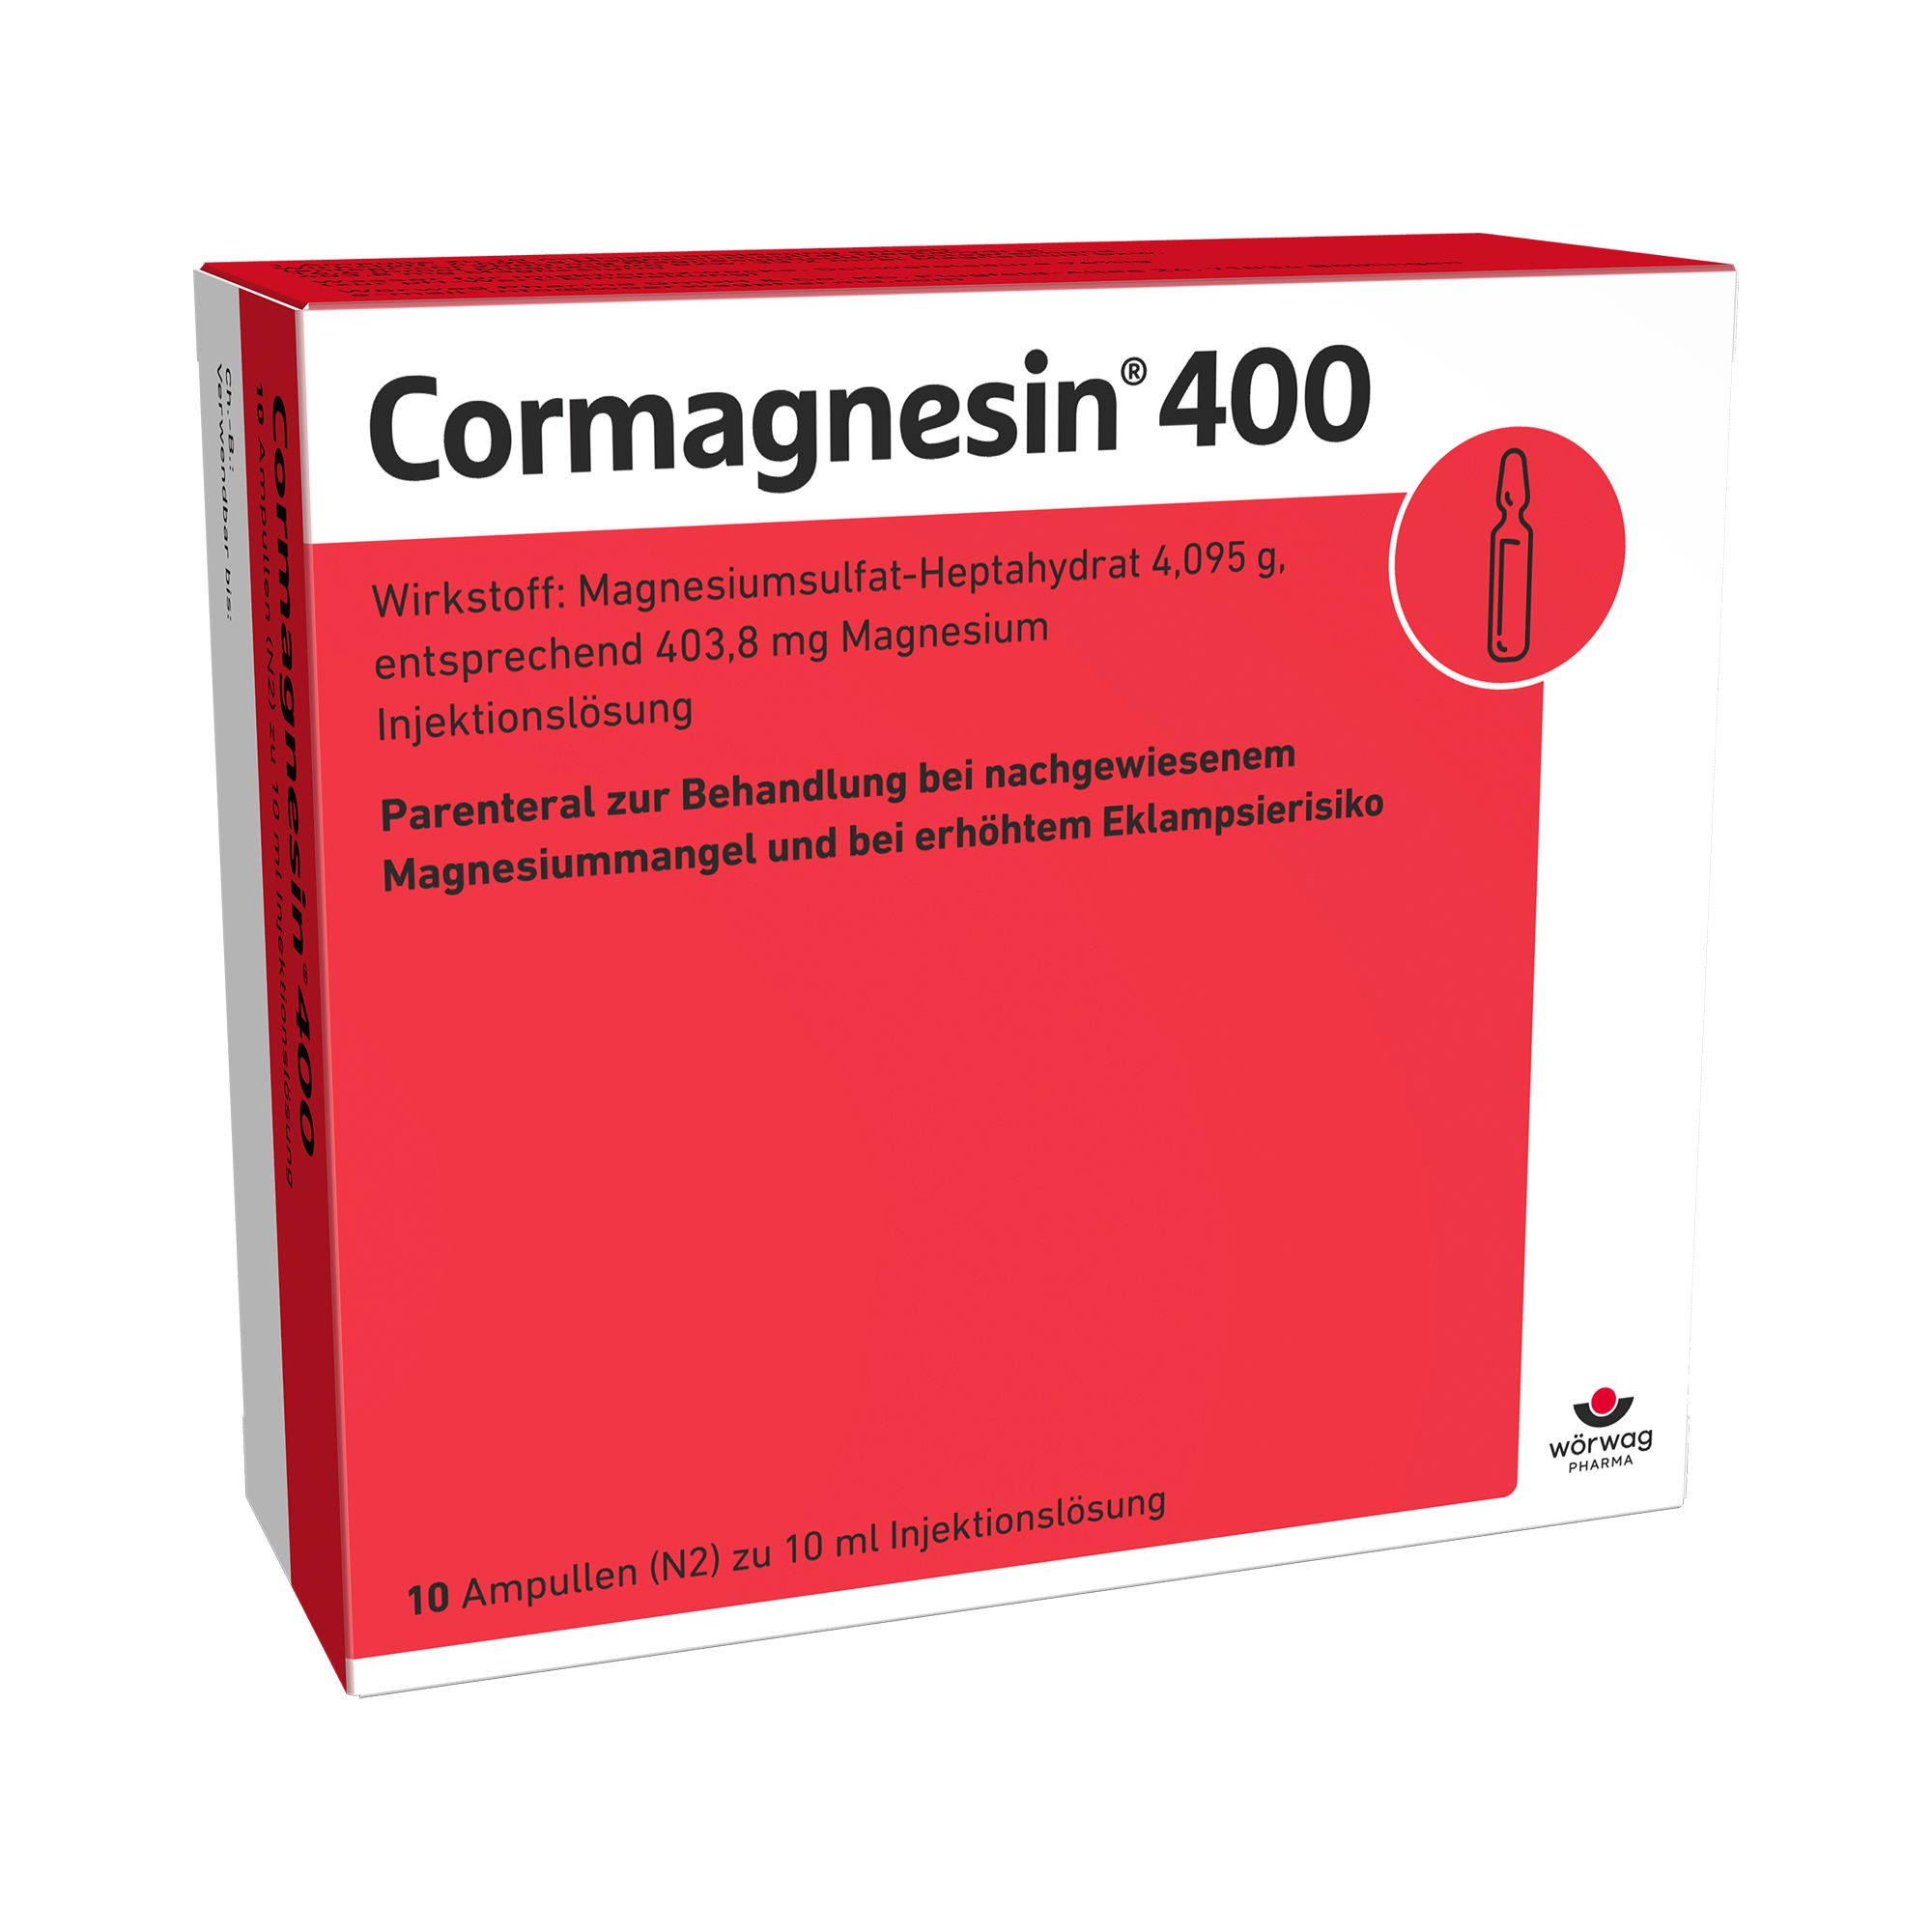 Cormagnesin® 400